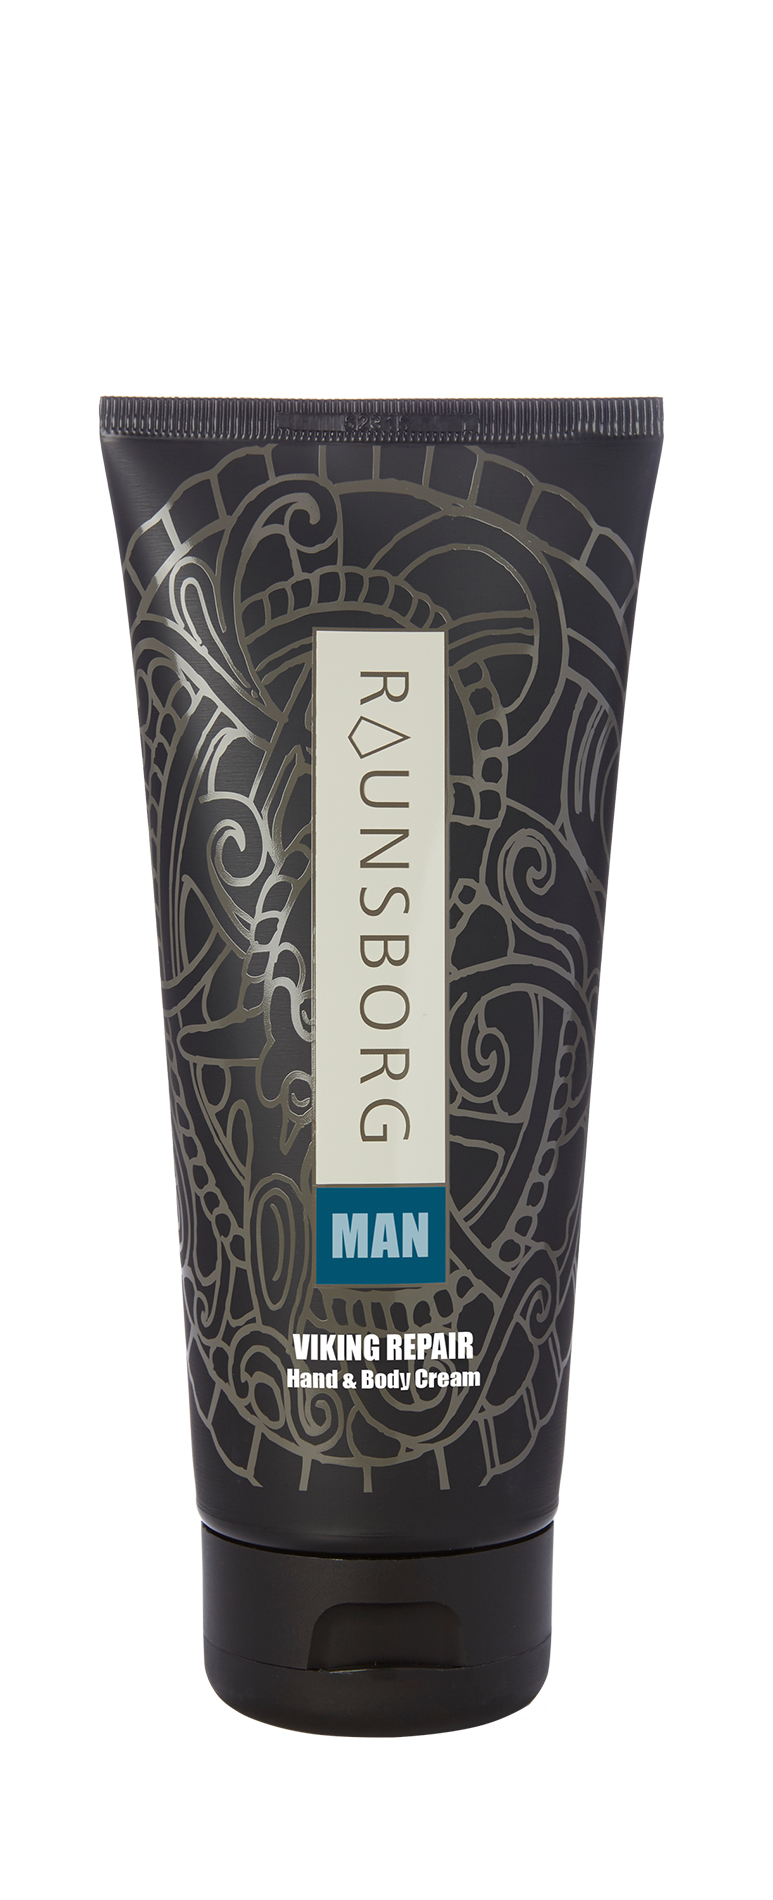 Se Raunsborg Man Viking Repair Hand & Body Cream 200 ml. hos Well.dk